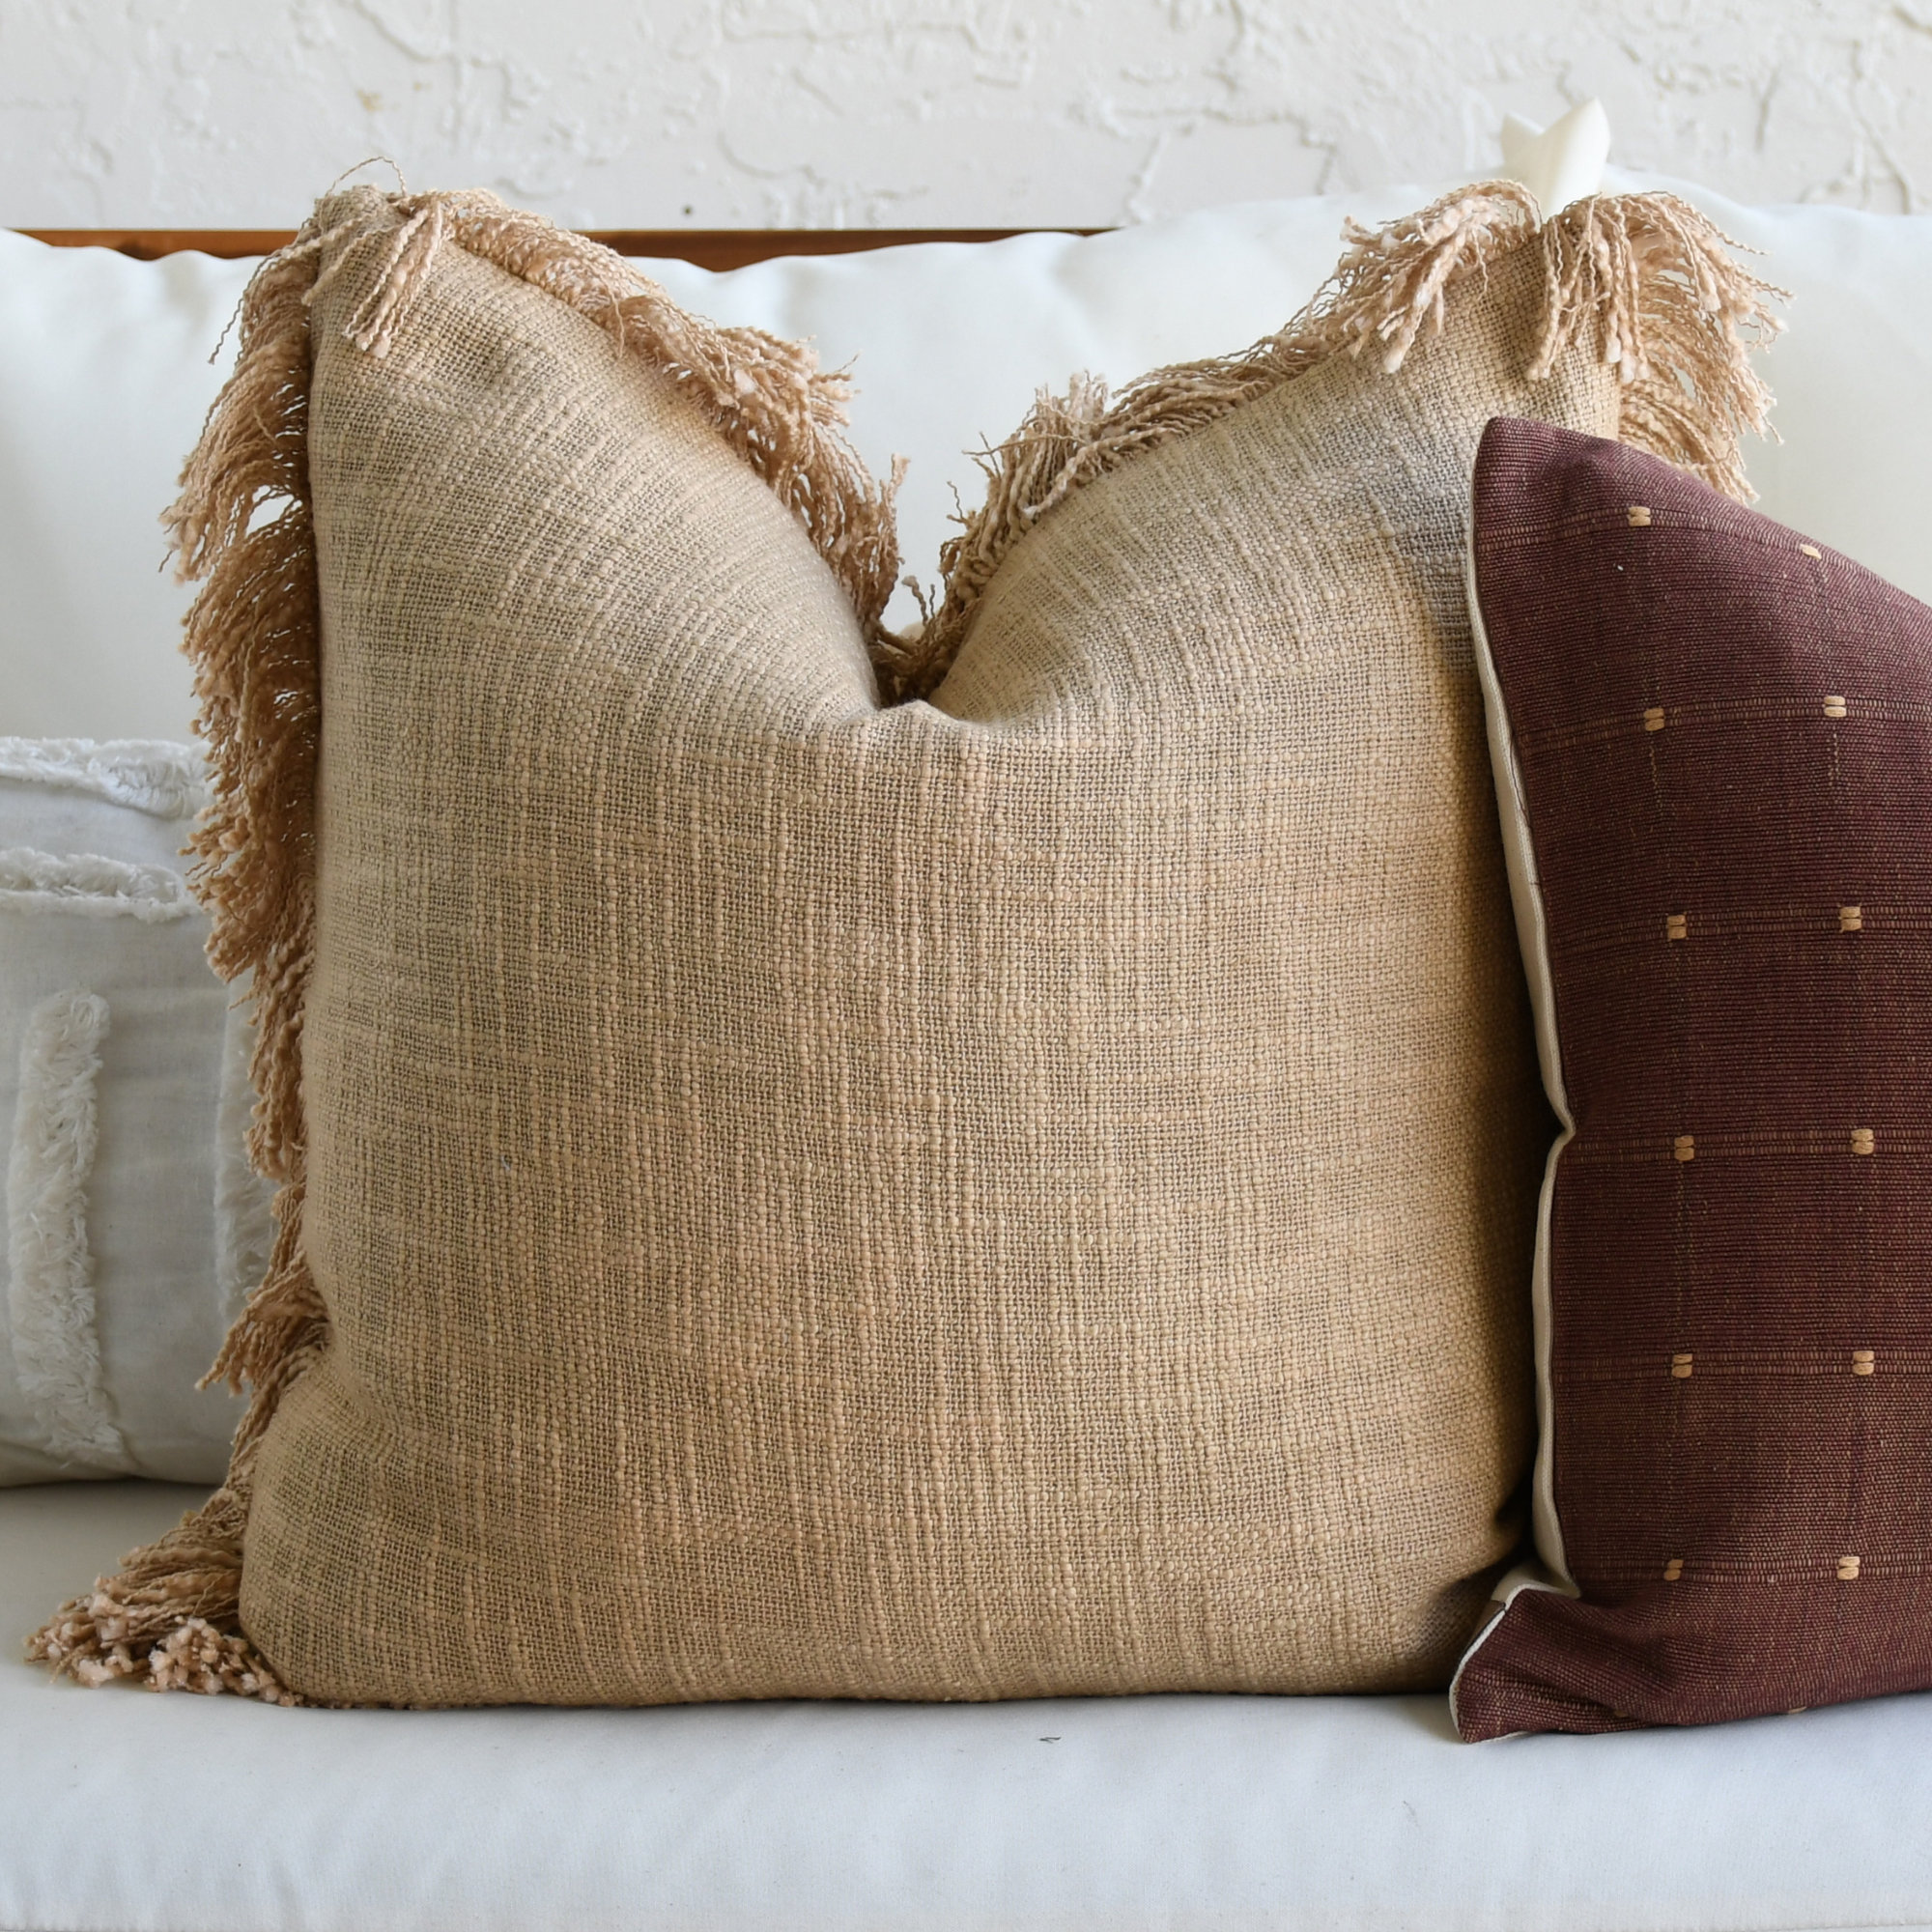 Bashawn Square Cotton Pillow Cover & Insert Gracie Oaks